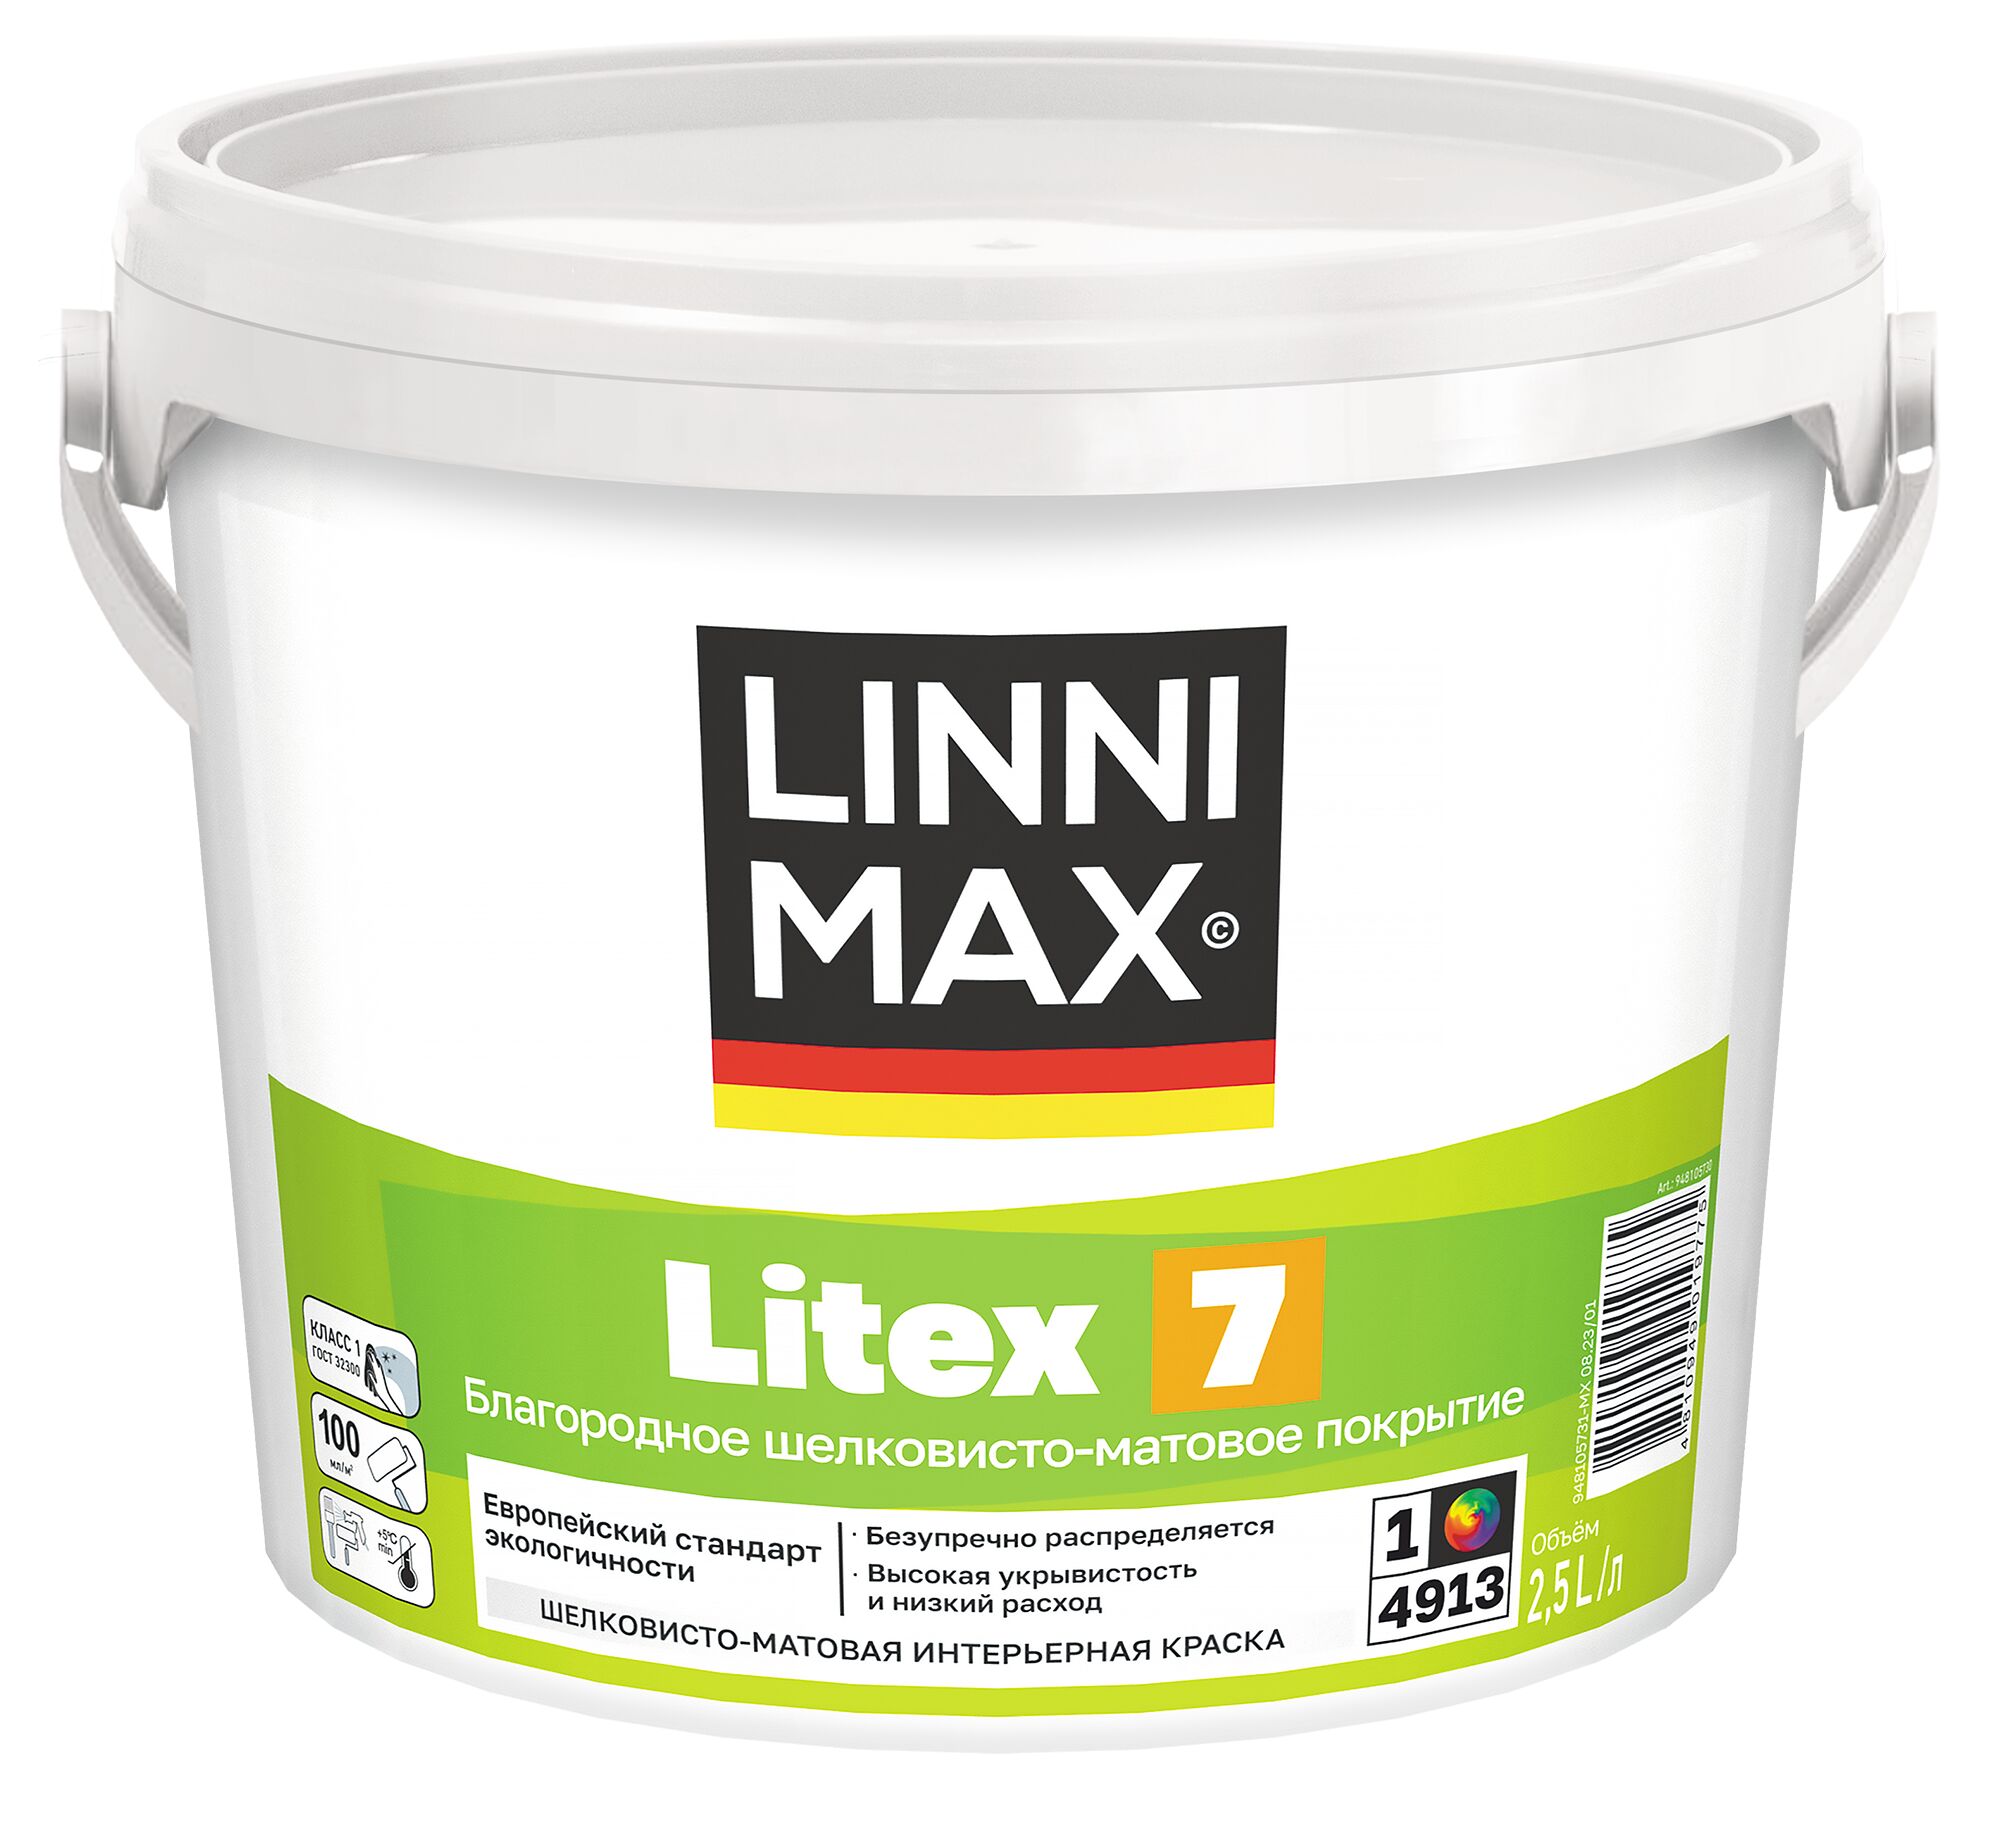 Litex 7 2,5л Краска водно-дисперсионная для внутренних работ База1 LINNIMAX, Litex 7 2,5л Краска водно-дисперсионная для внутренних работ База1 LINNIMAX